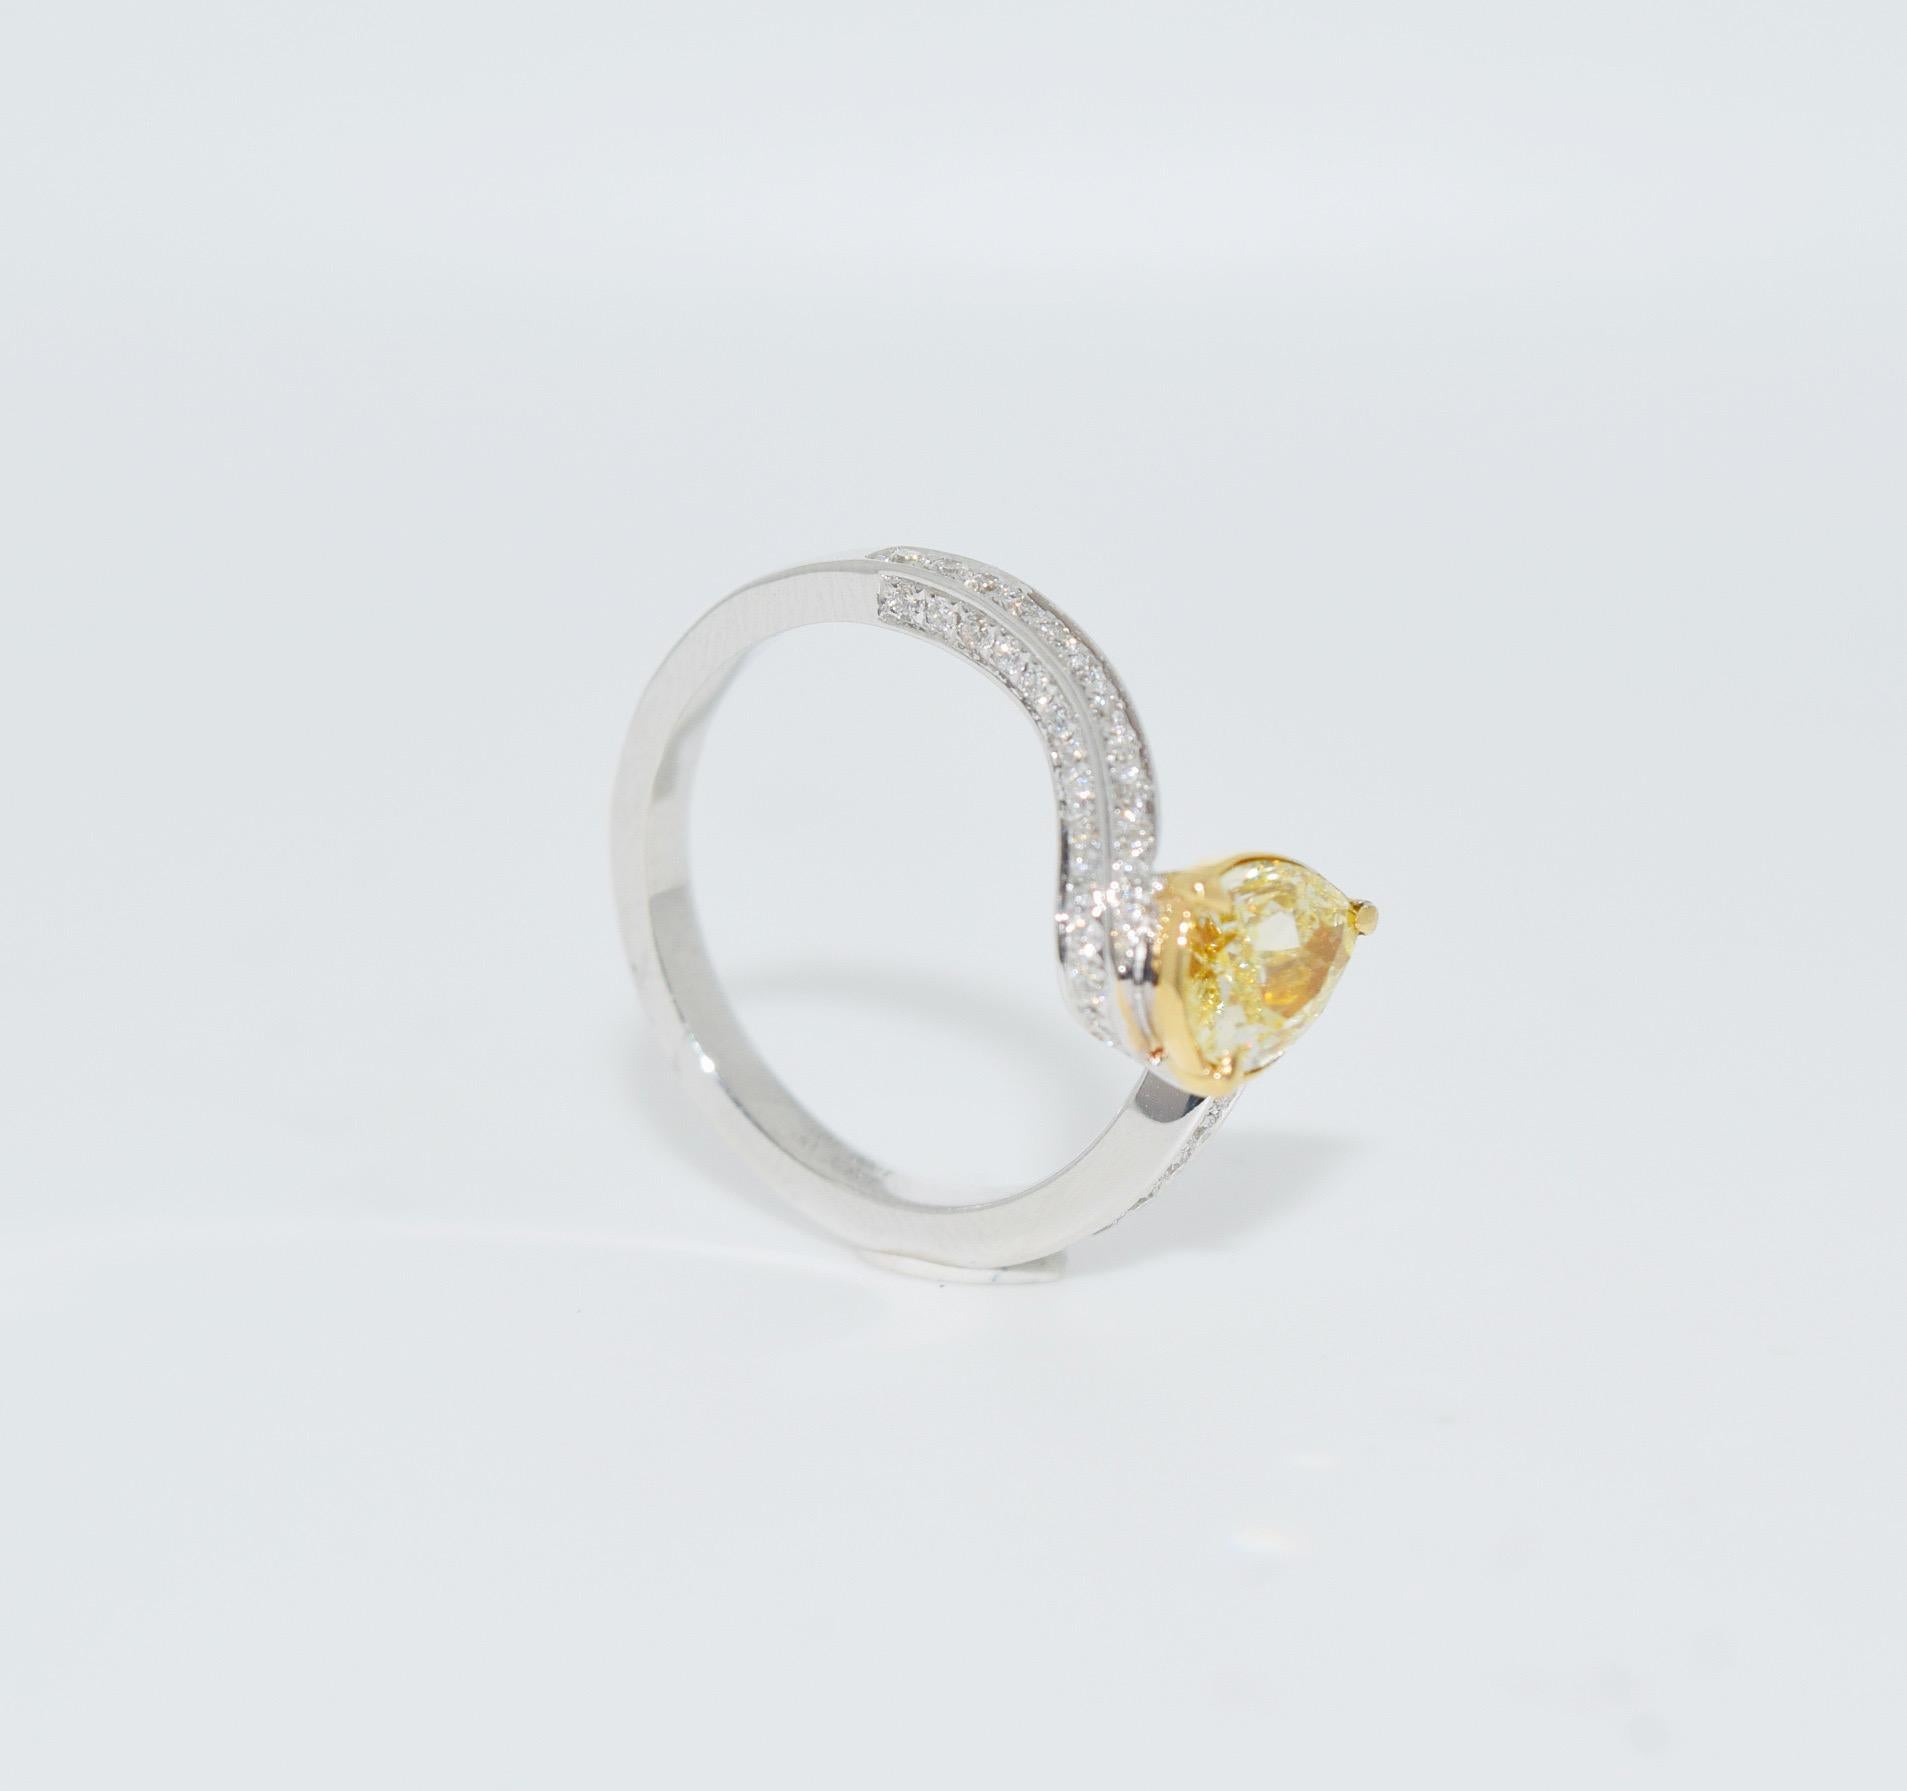 1.00 Carat Diamond Ring VS2 Clarity GIA Certified For Sale 2